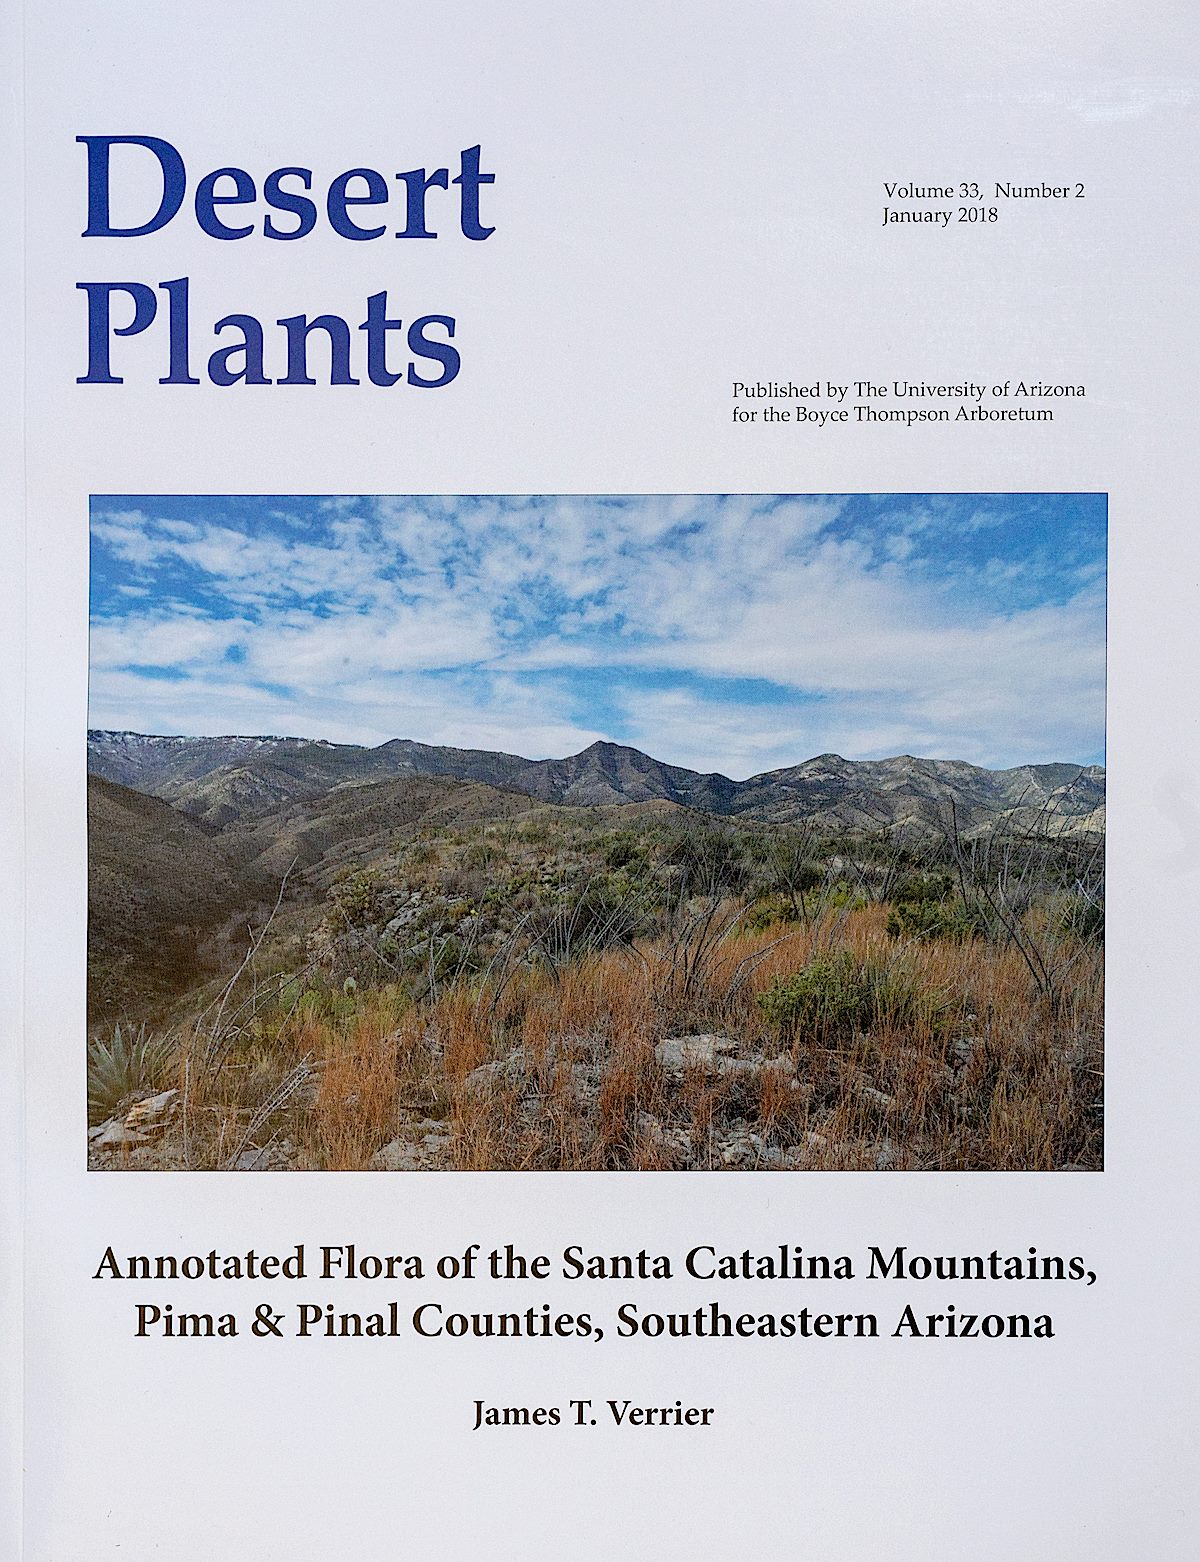 Desert Plants - Annotated Flora of the Santa Catalina Mountains, Pima & Pinal Counties, Southeastern Arizona. June 2018.